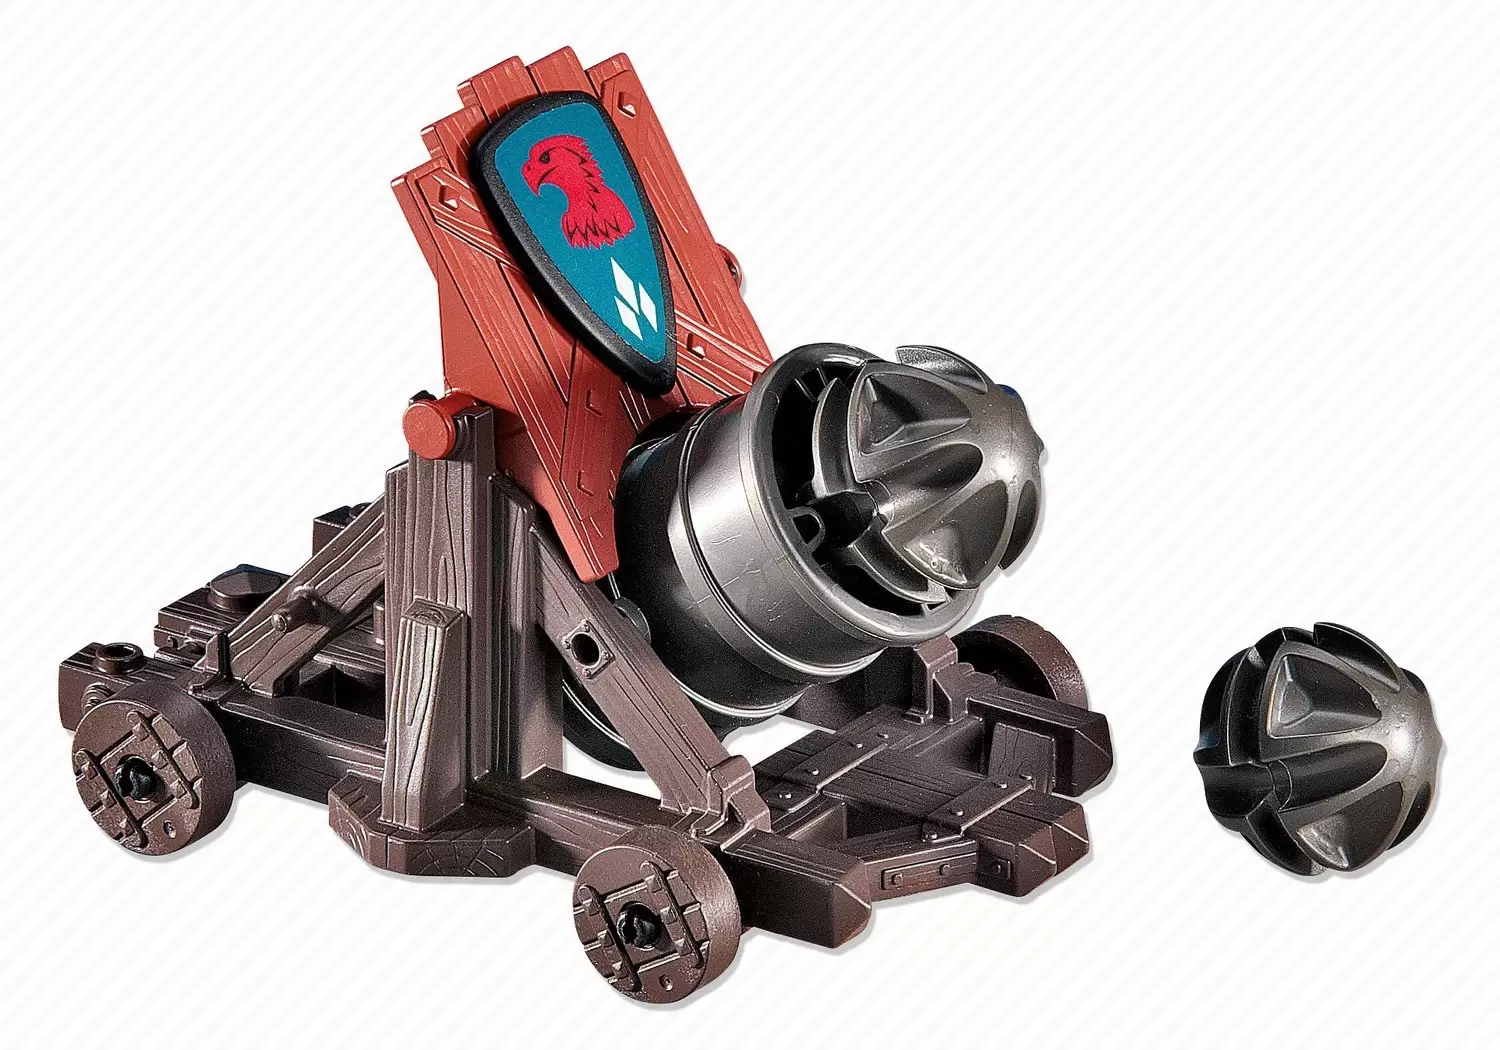 Playmobil Accessories & decorations - Falcon Knight Cannon